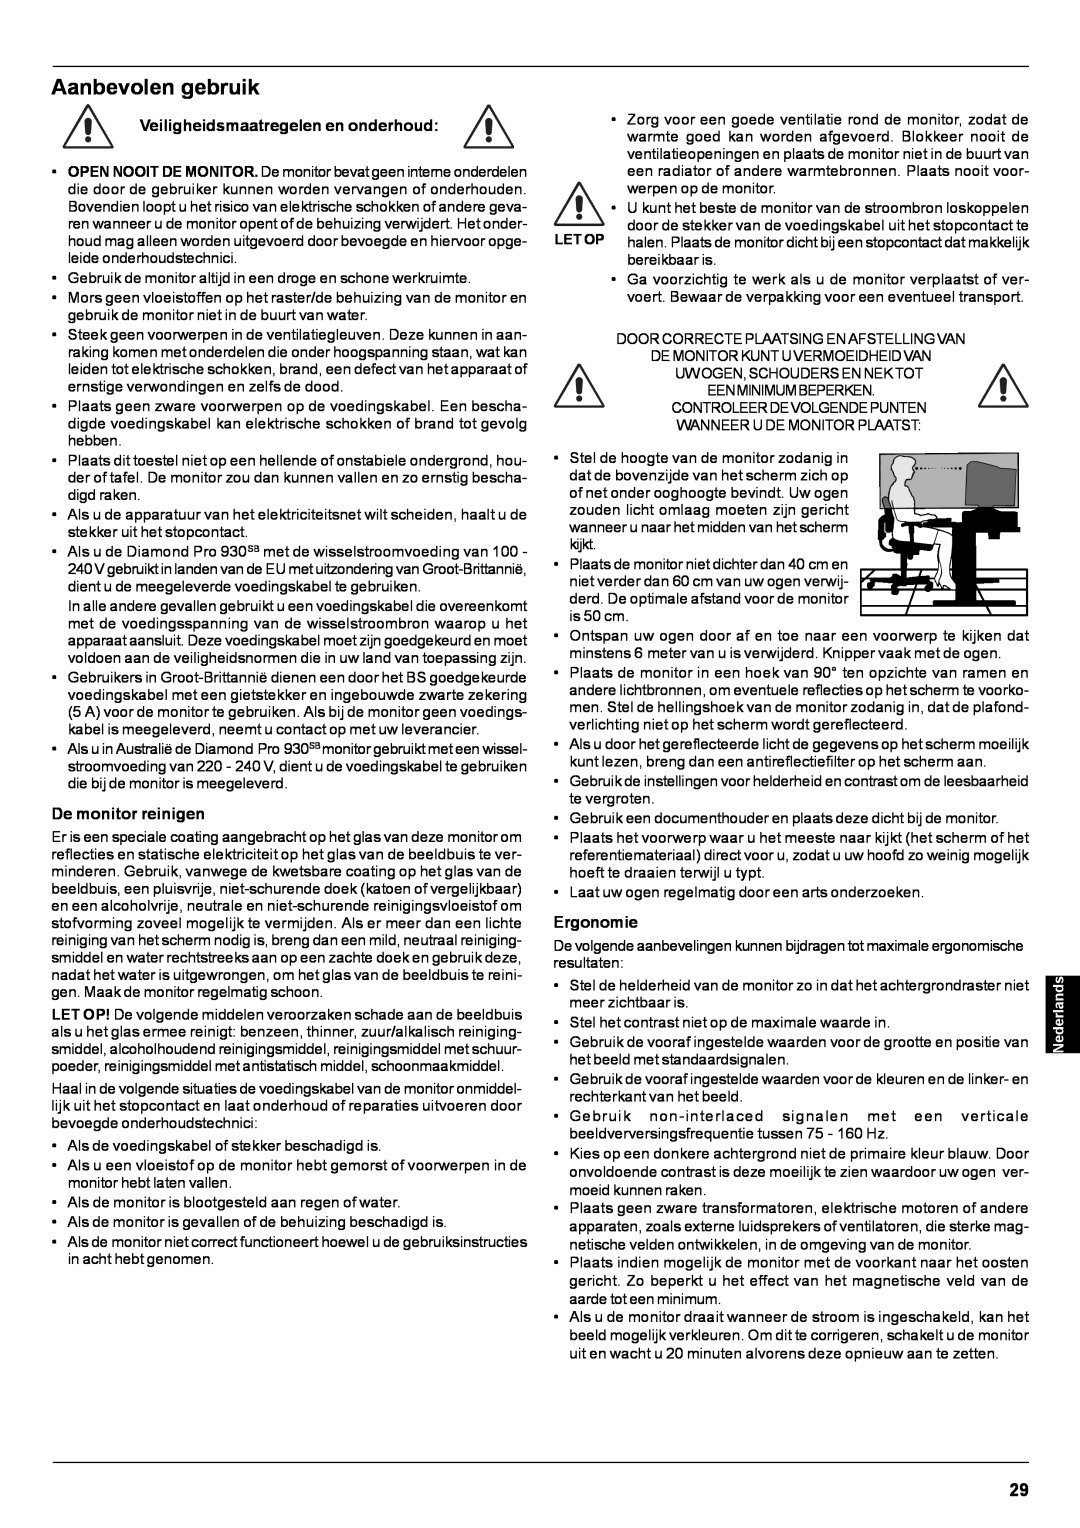 Mitsubishi Electronics Pro 930SB user manual Aanbevolen gebruik, Nederlands 